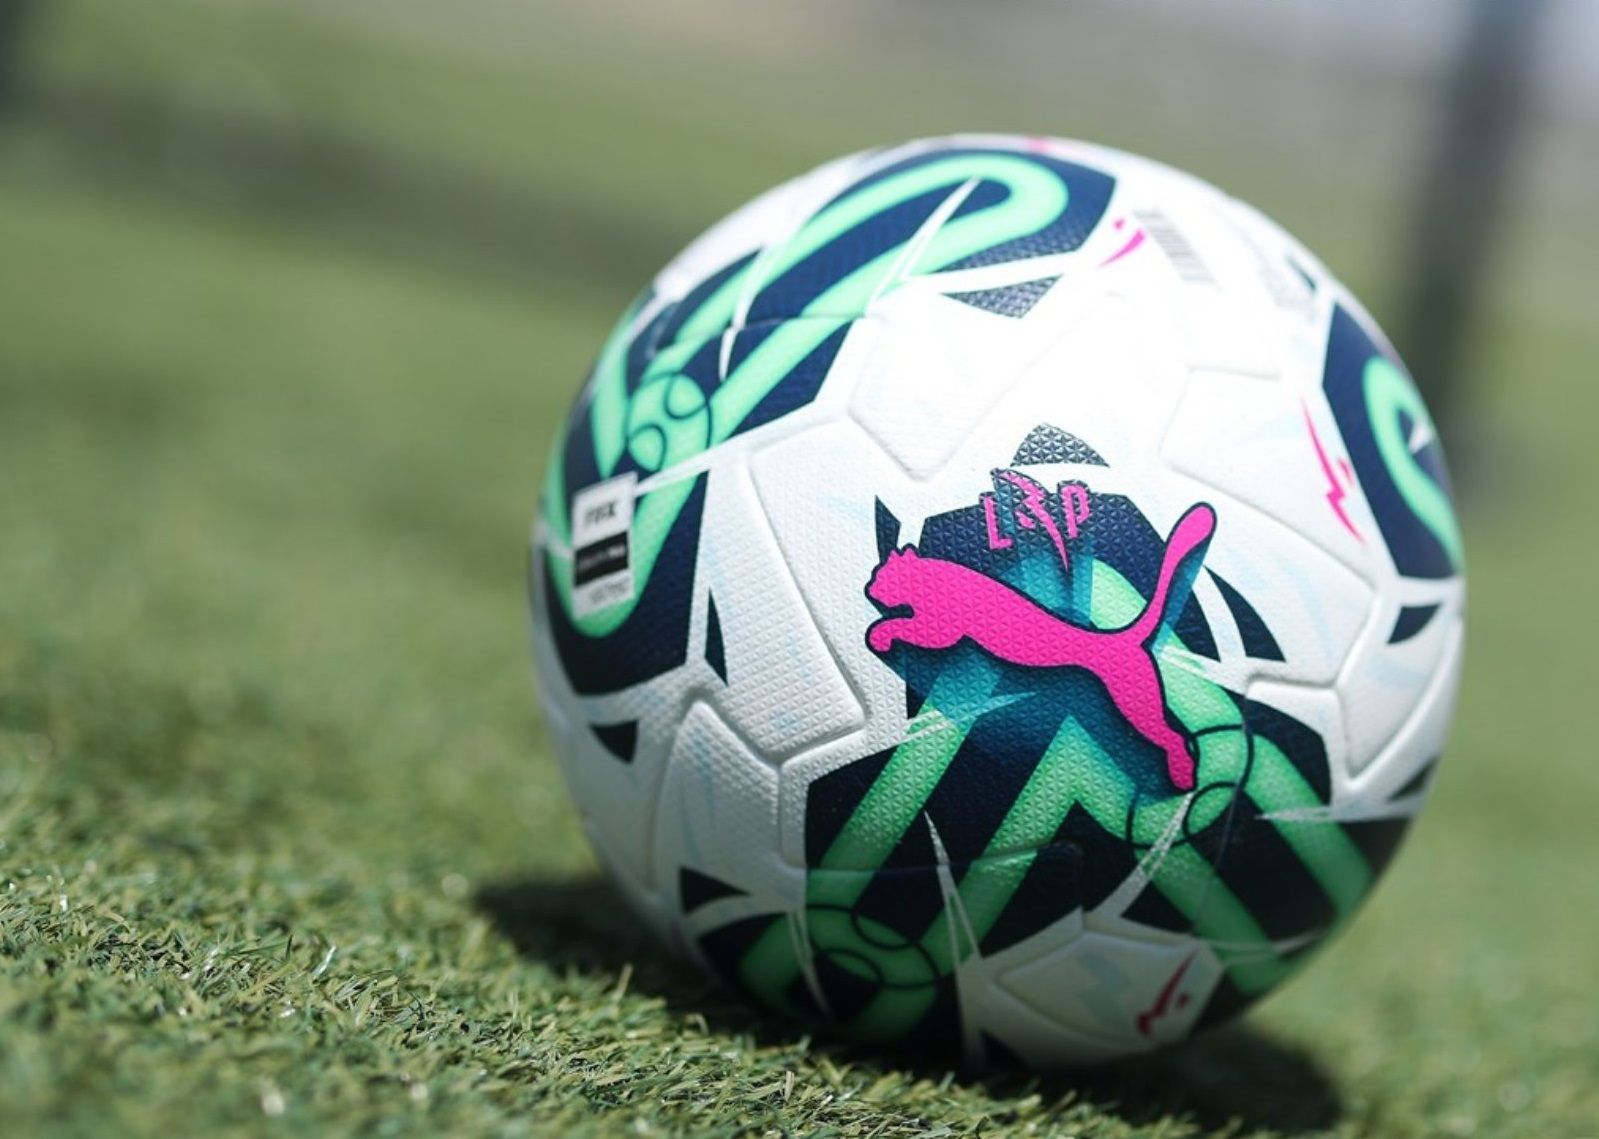 La Liga Portugal firma a la casa de apuestas Betclic como 'title sponsor'  hasta 2027